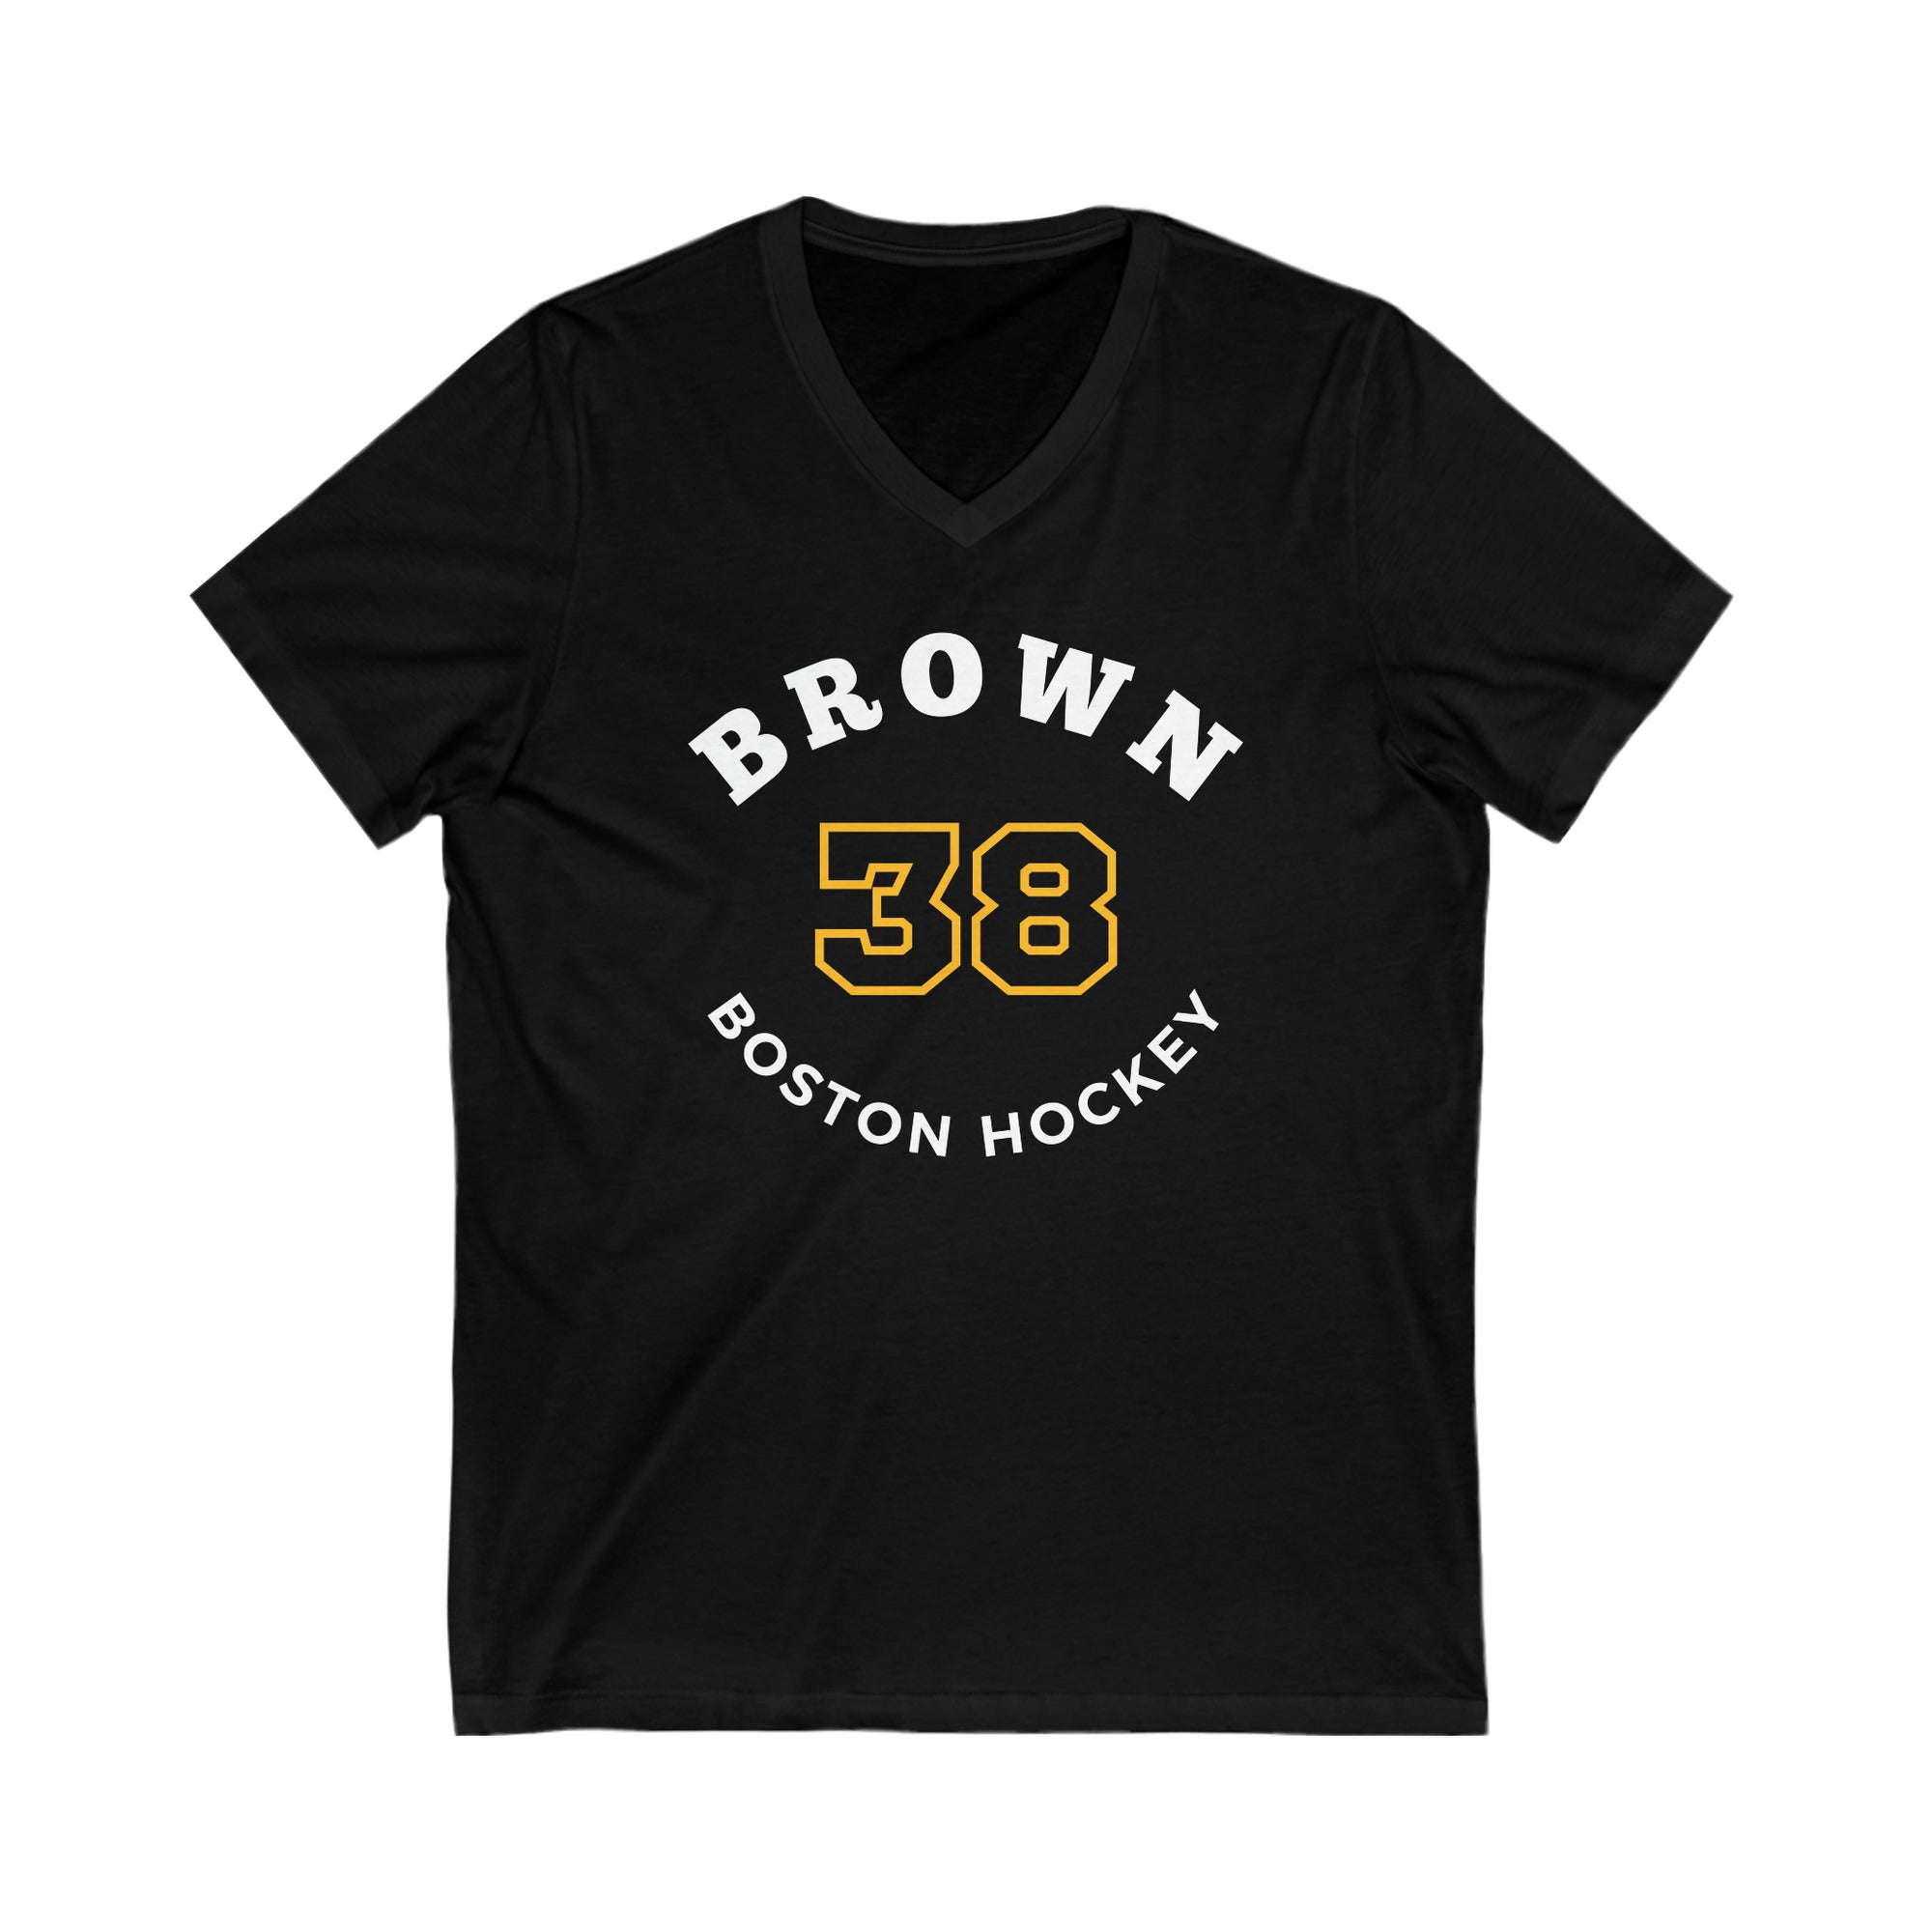 Brown 38 Boston Hockey Number Arch Design Unisex V-Neck Tee